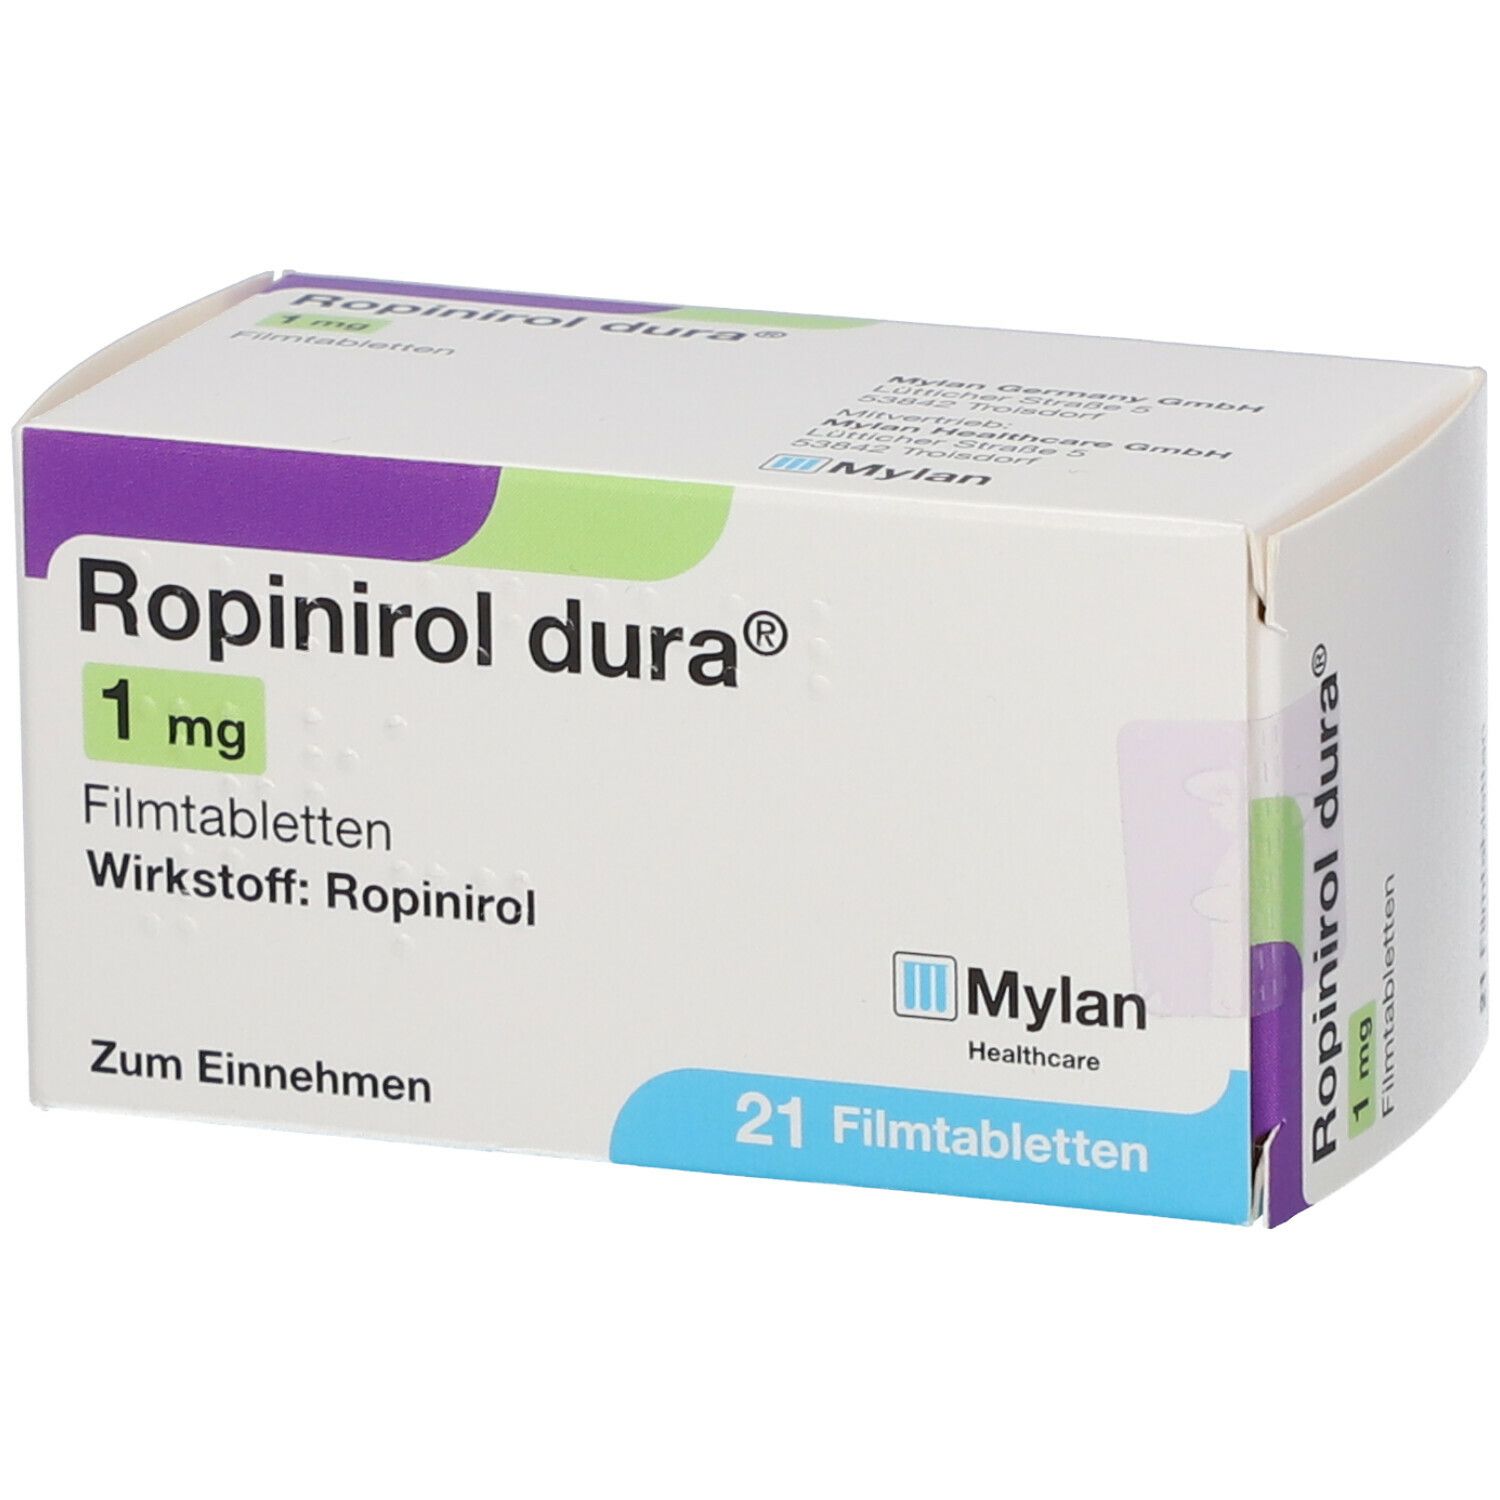 Ropinirol dura® 1 mg